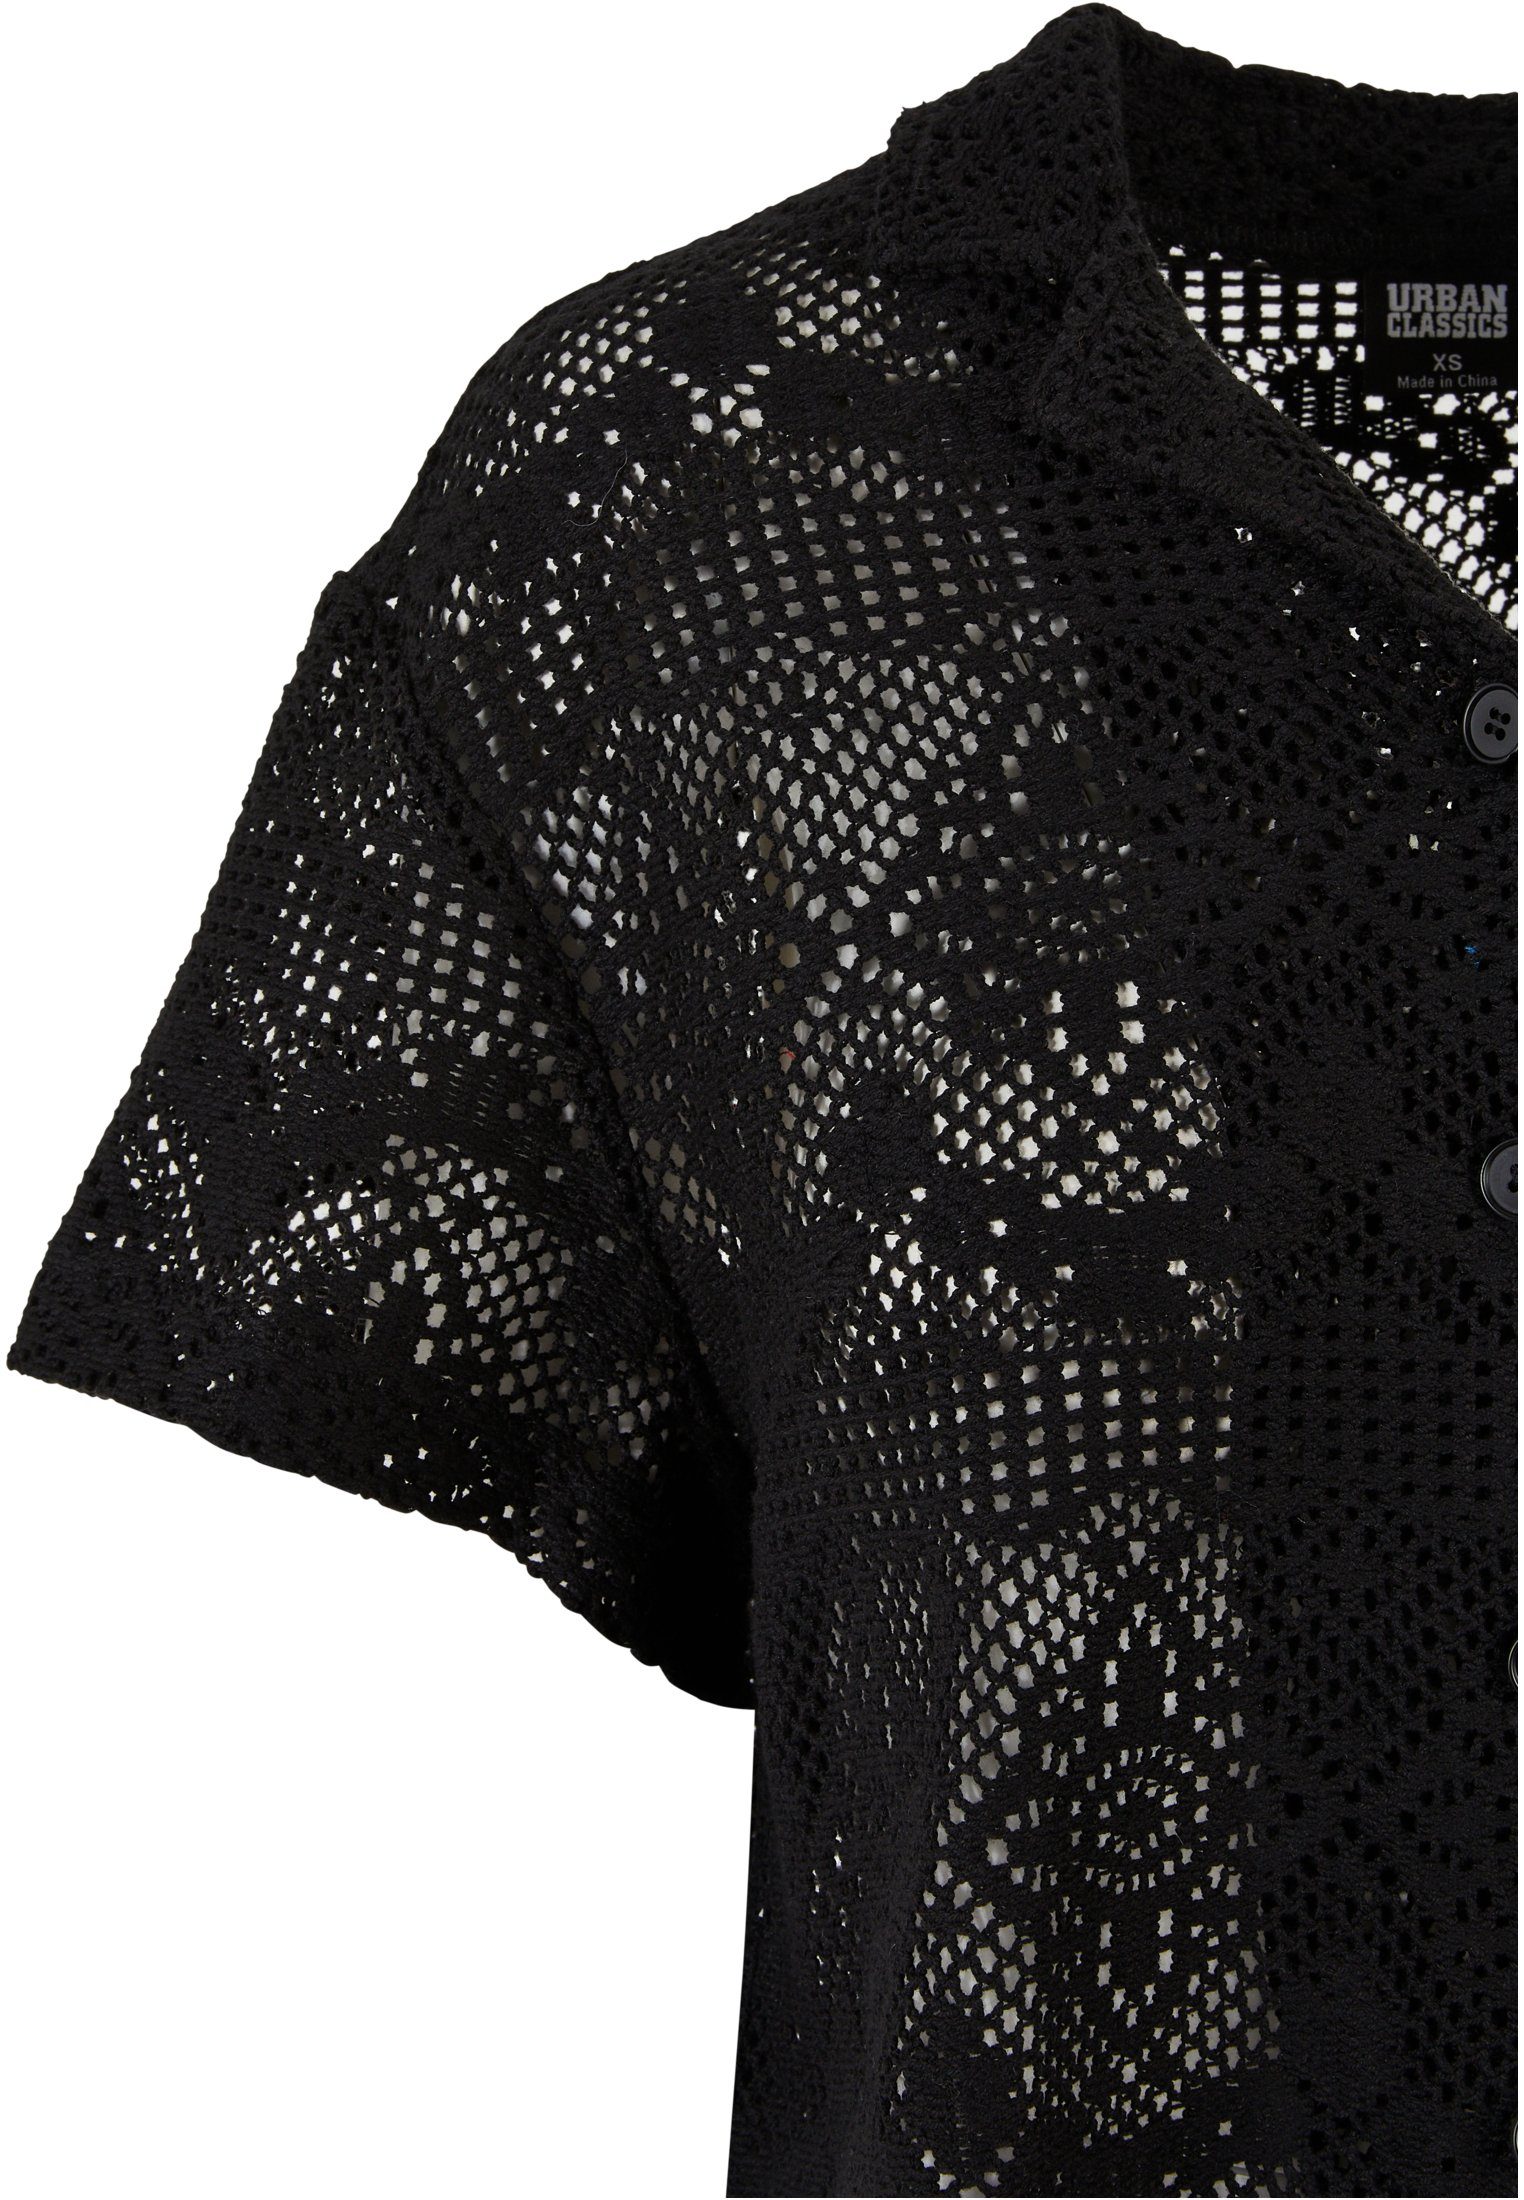 CLASSICS Shirt Klassische Resort Lace Crochet Ladies Bluse Damen URBAN